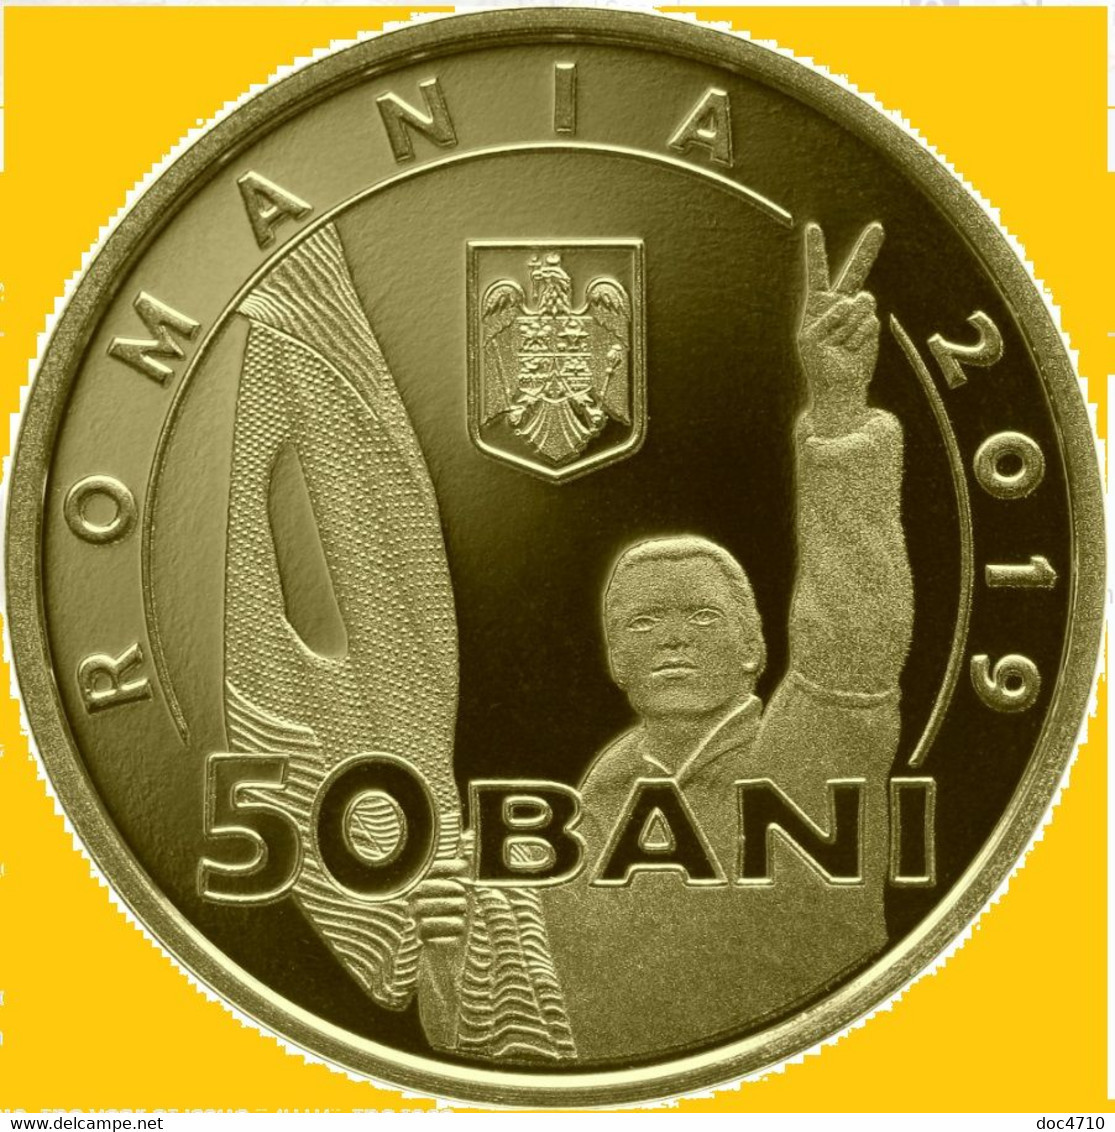 Romania 50 Bani 2019, 30 Years Romanian Revolution Of December 1989, KM#New, Unc - Panama